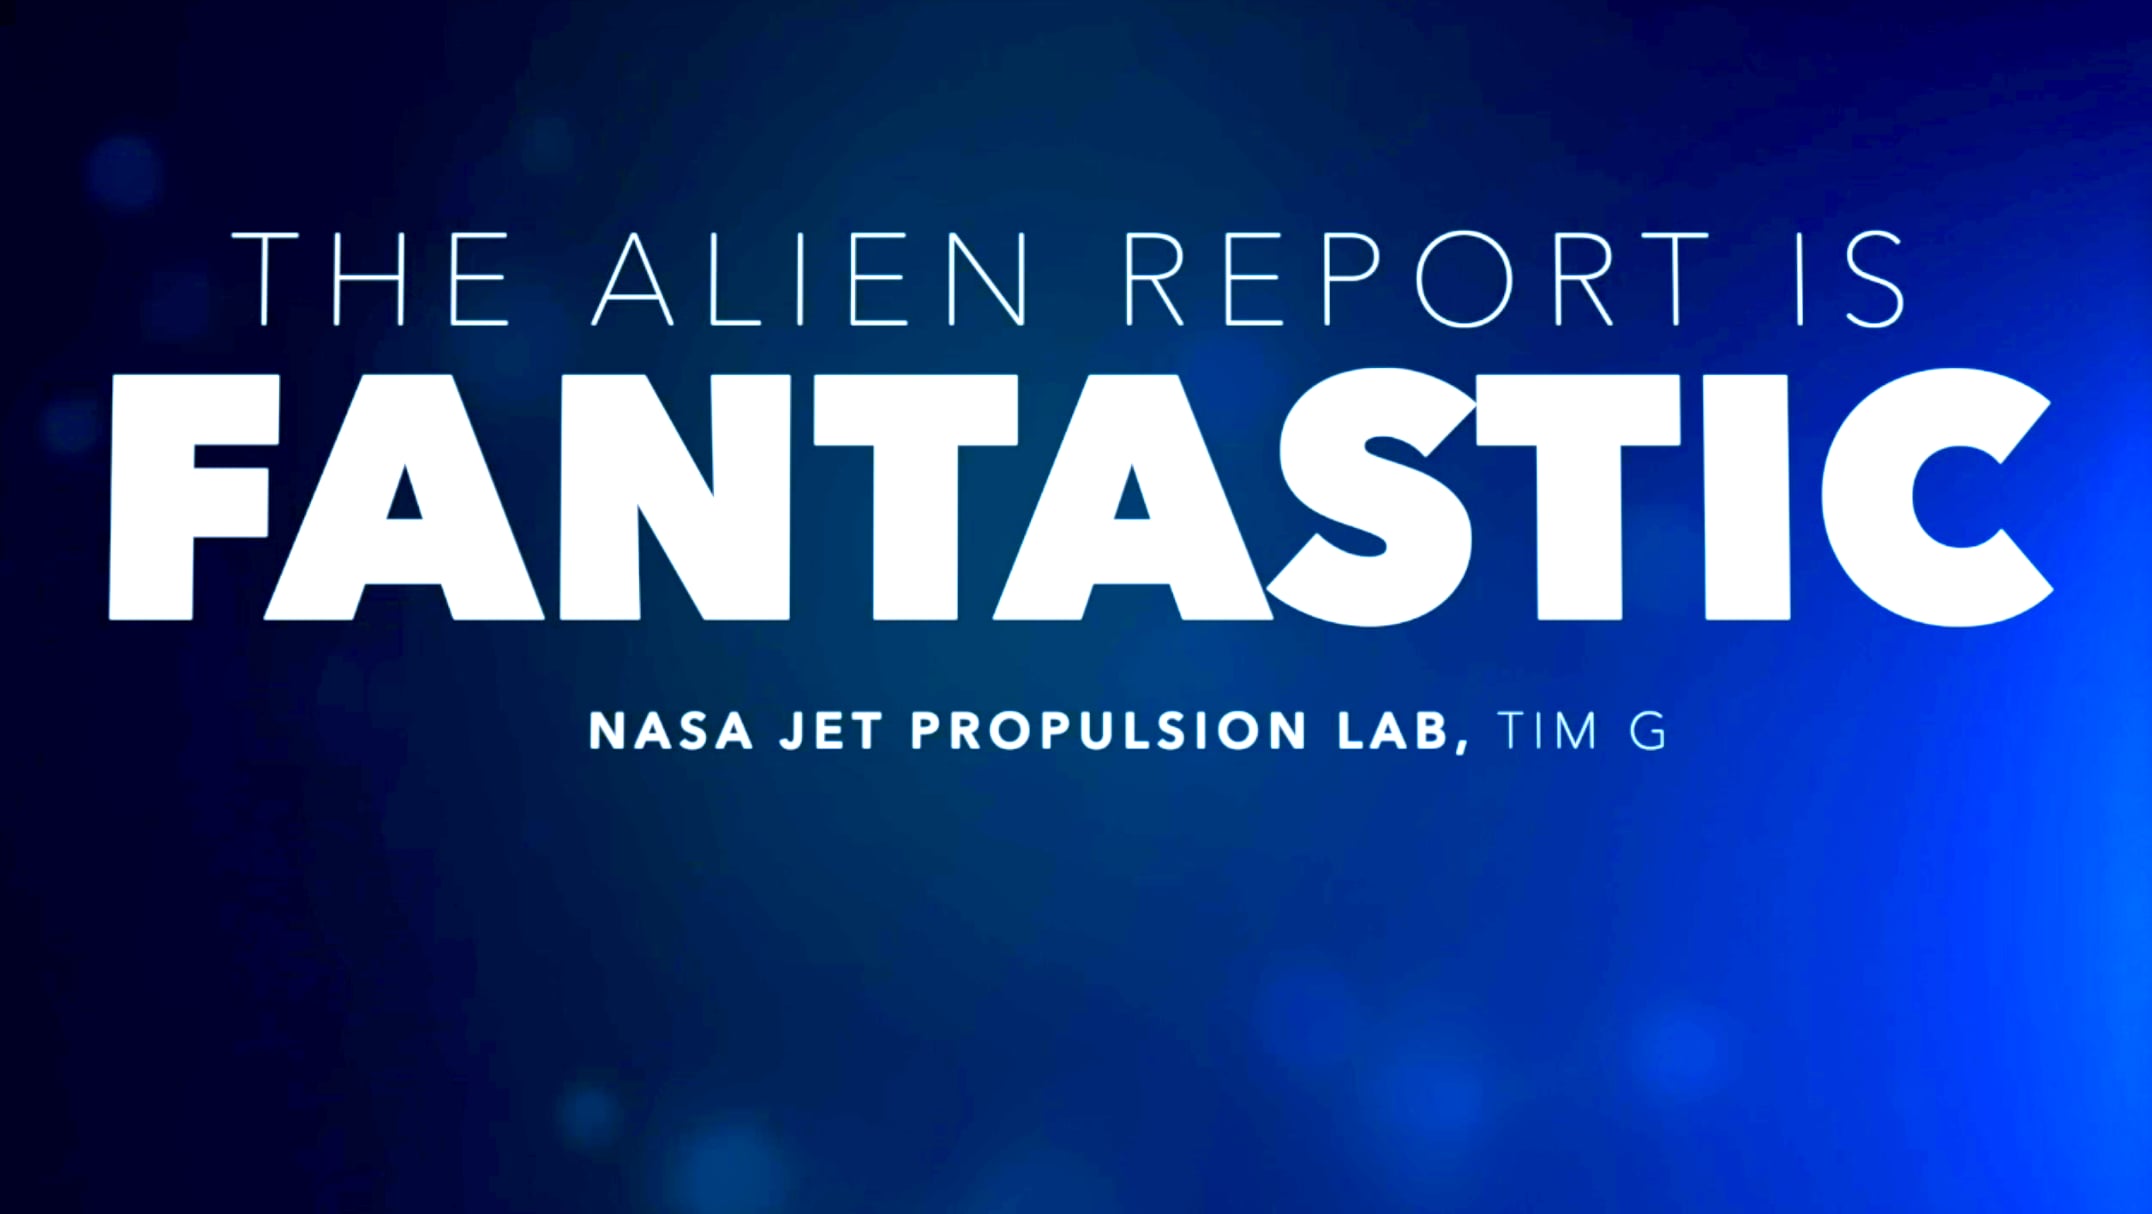 Watch Alien Report Trailer (Quotes).m4v Online Vimeo On Demand on Vimeo